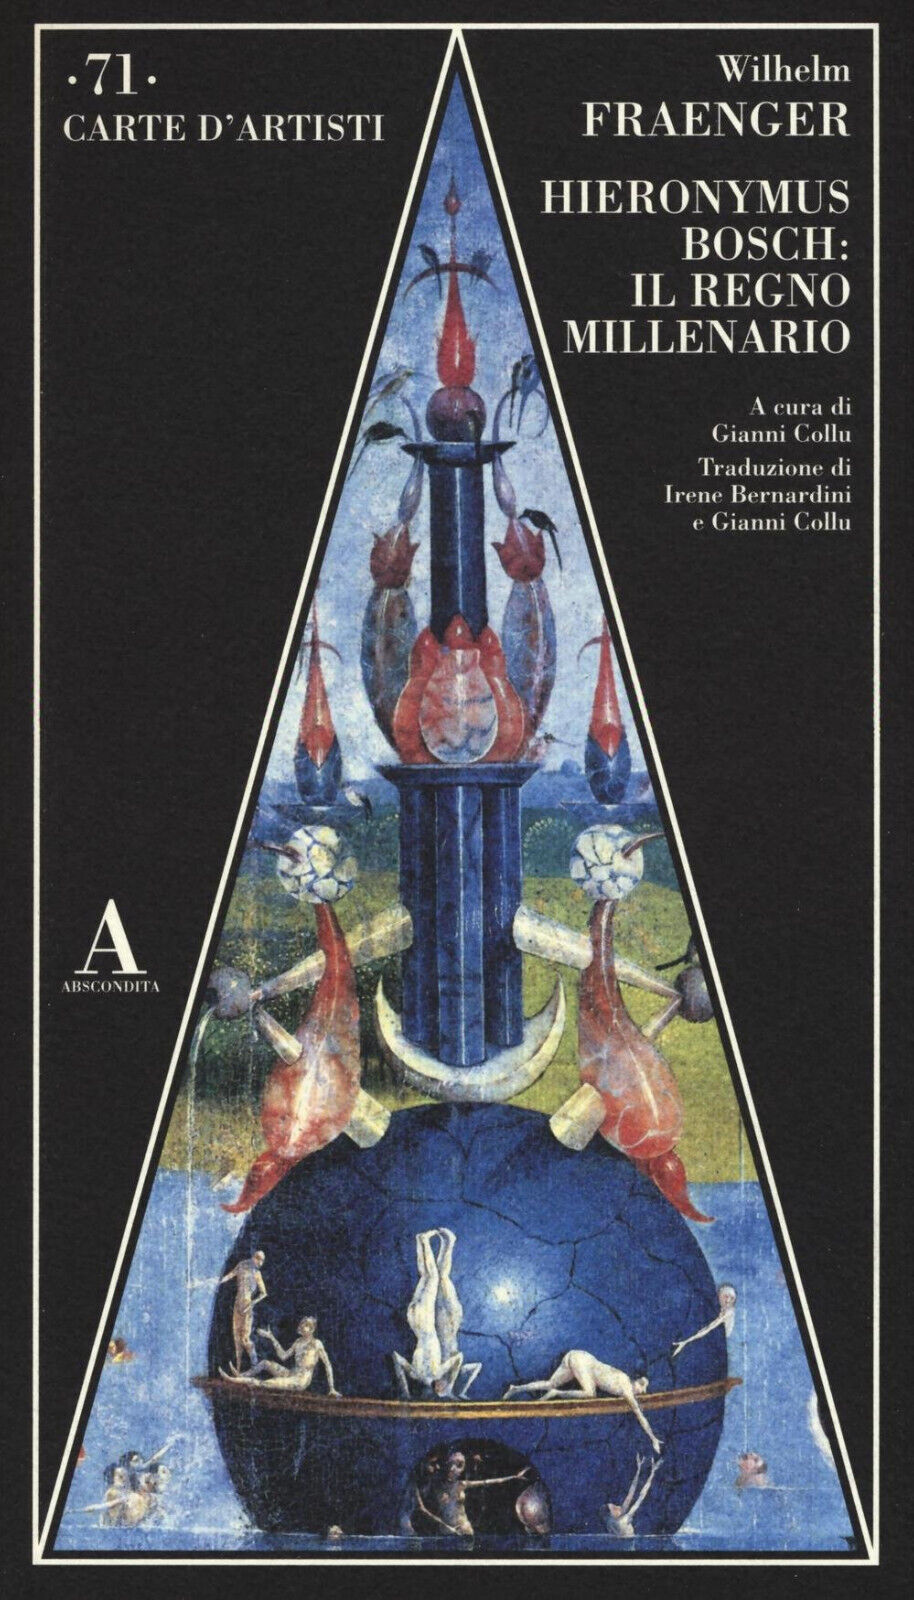 Hieronymus Bosch: il regno millenario. Ediz. illustrata - Wilhelm Fraenger -2016 libro usato